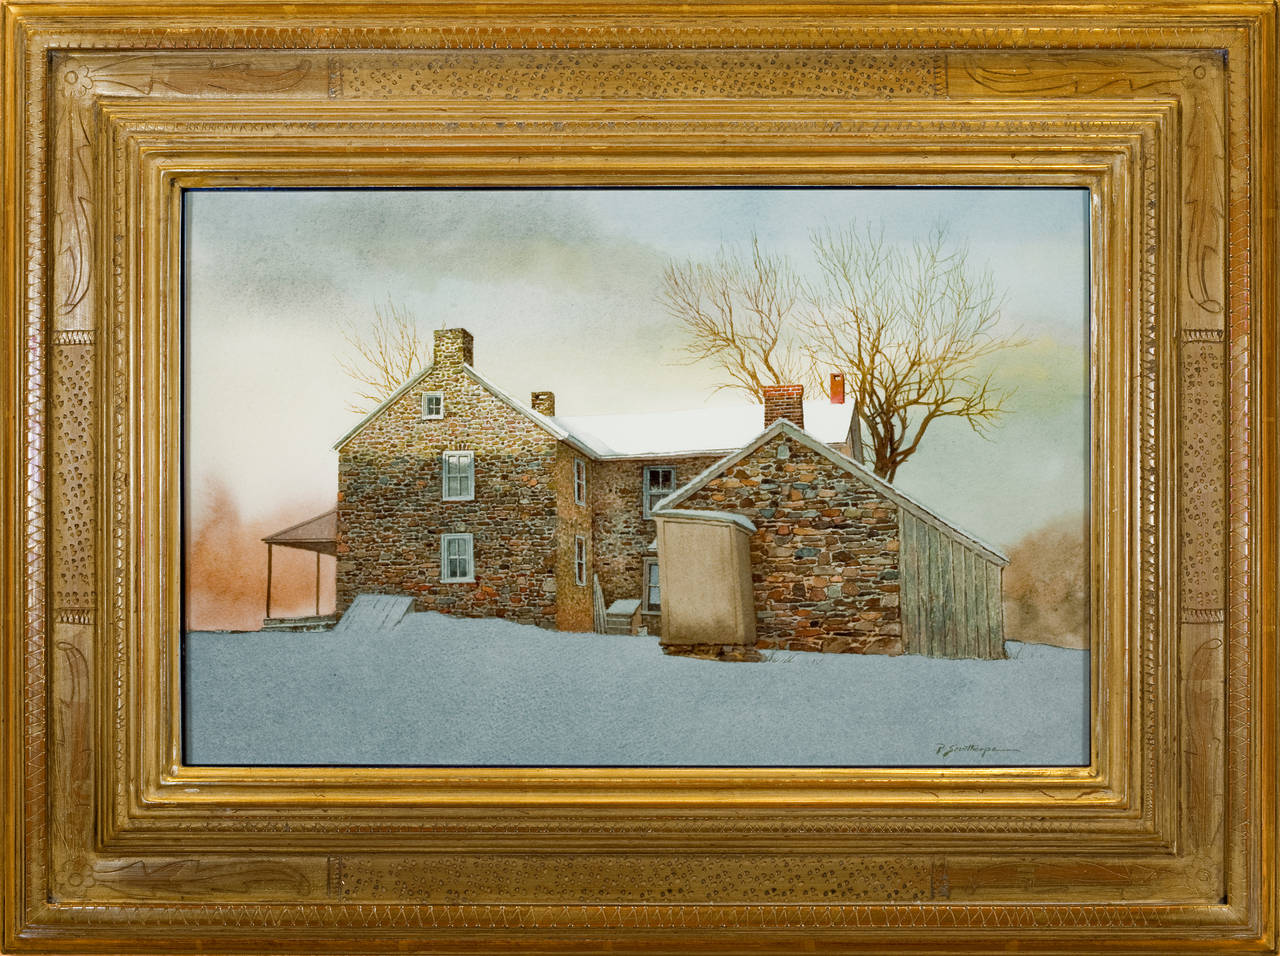 Peter Sculthorpe Landscape Art - "Stone Farm House in Snow"